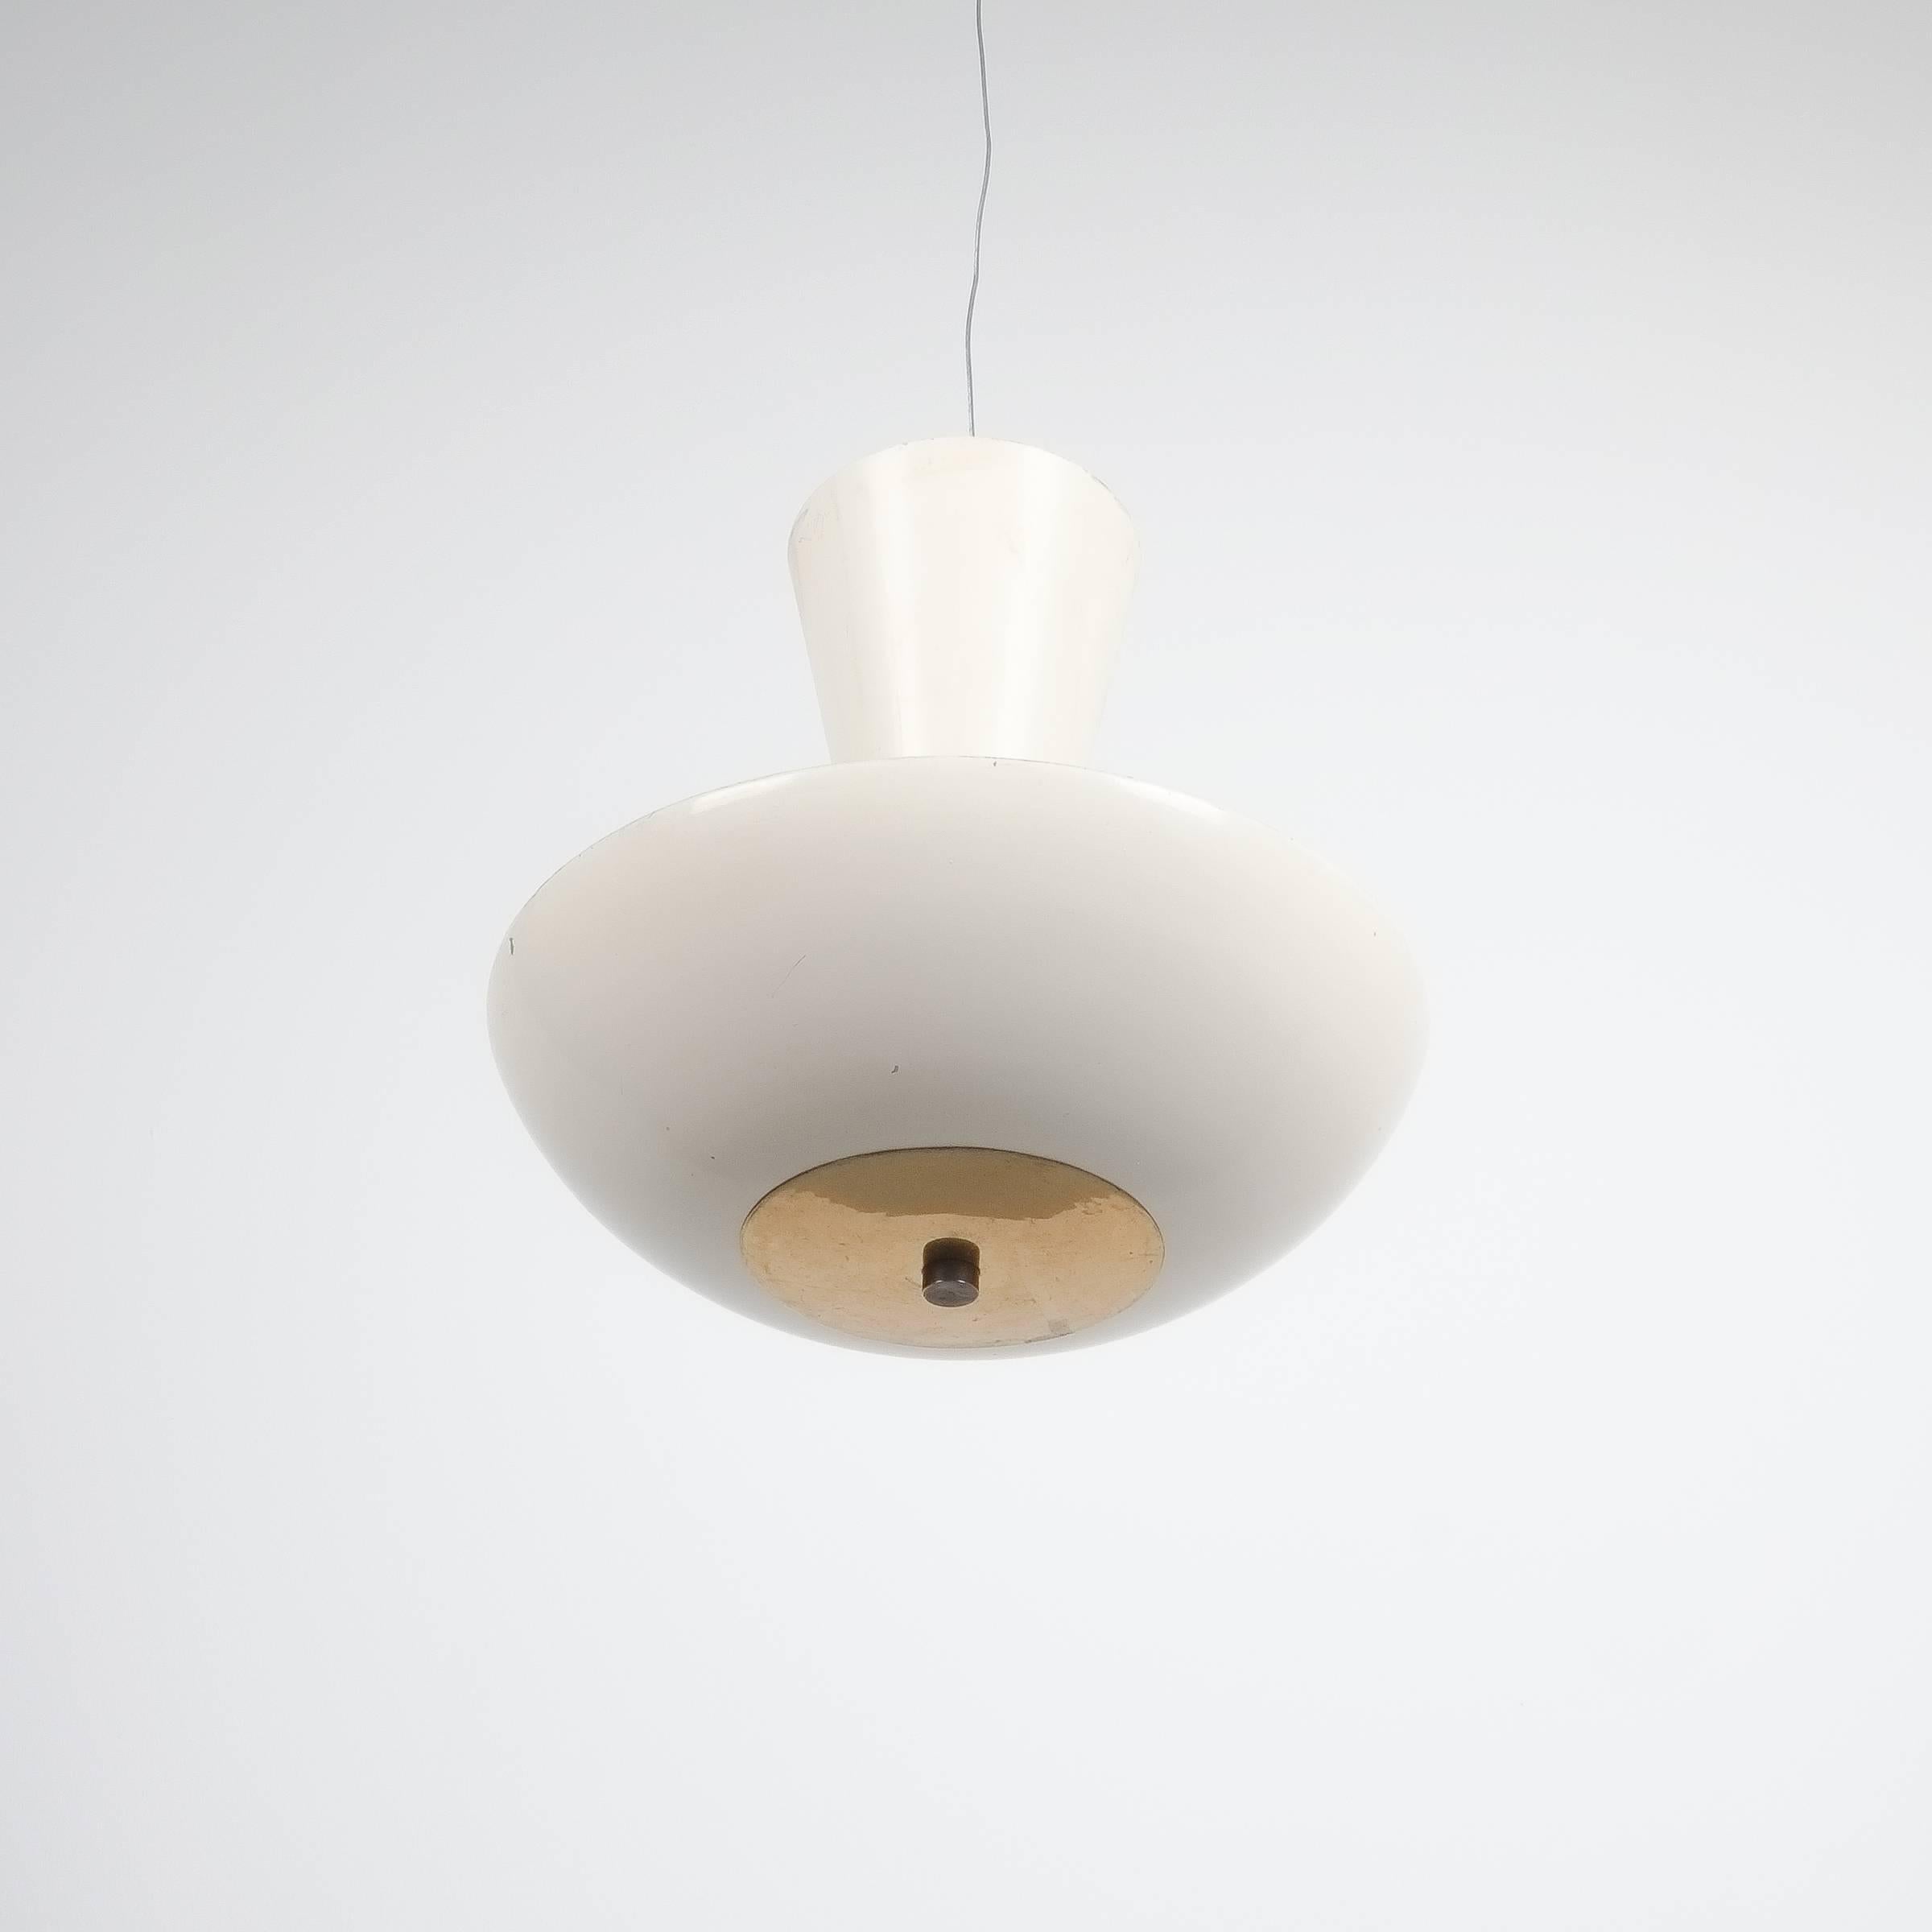 Enameled Gino Sarfatti For Arteluce 3003 Ceiling Lamp or Semi Flush Mount, Italy, 1950